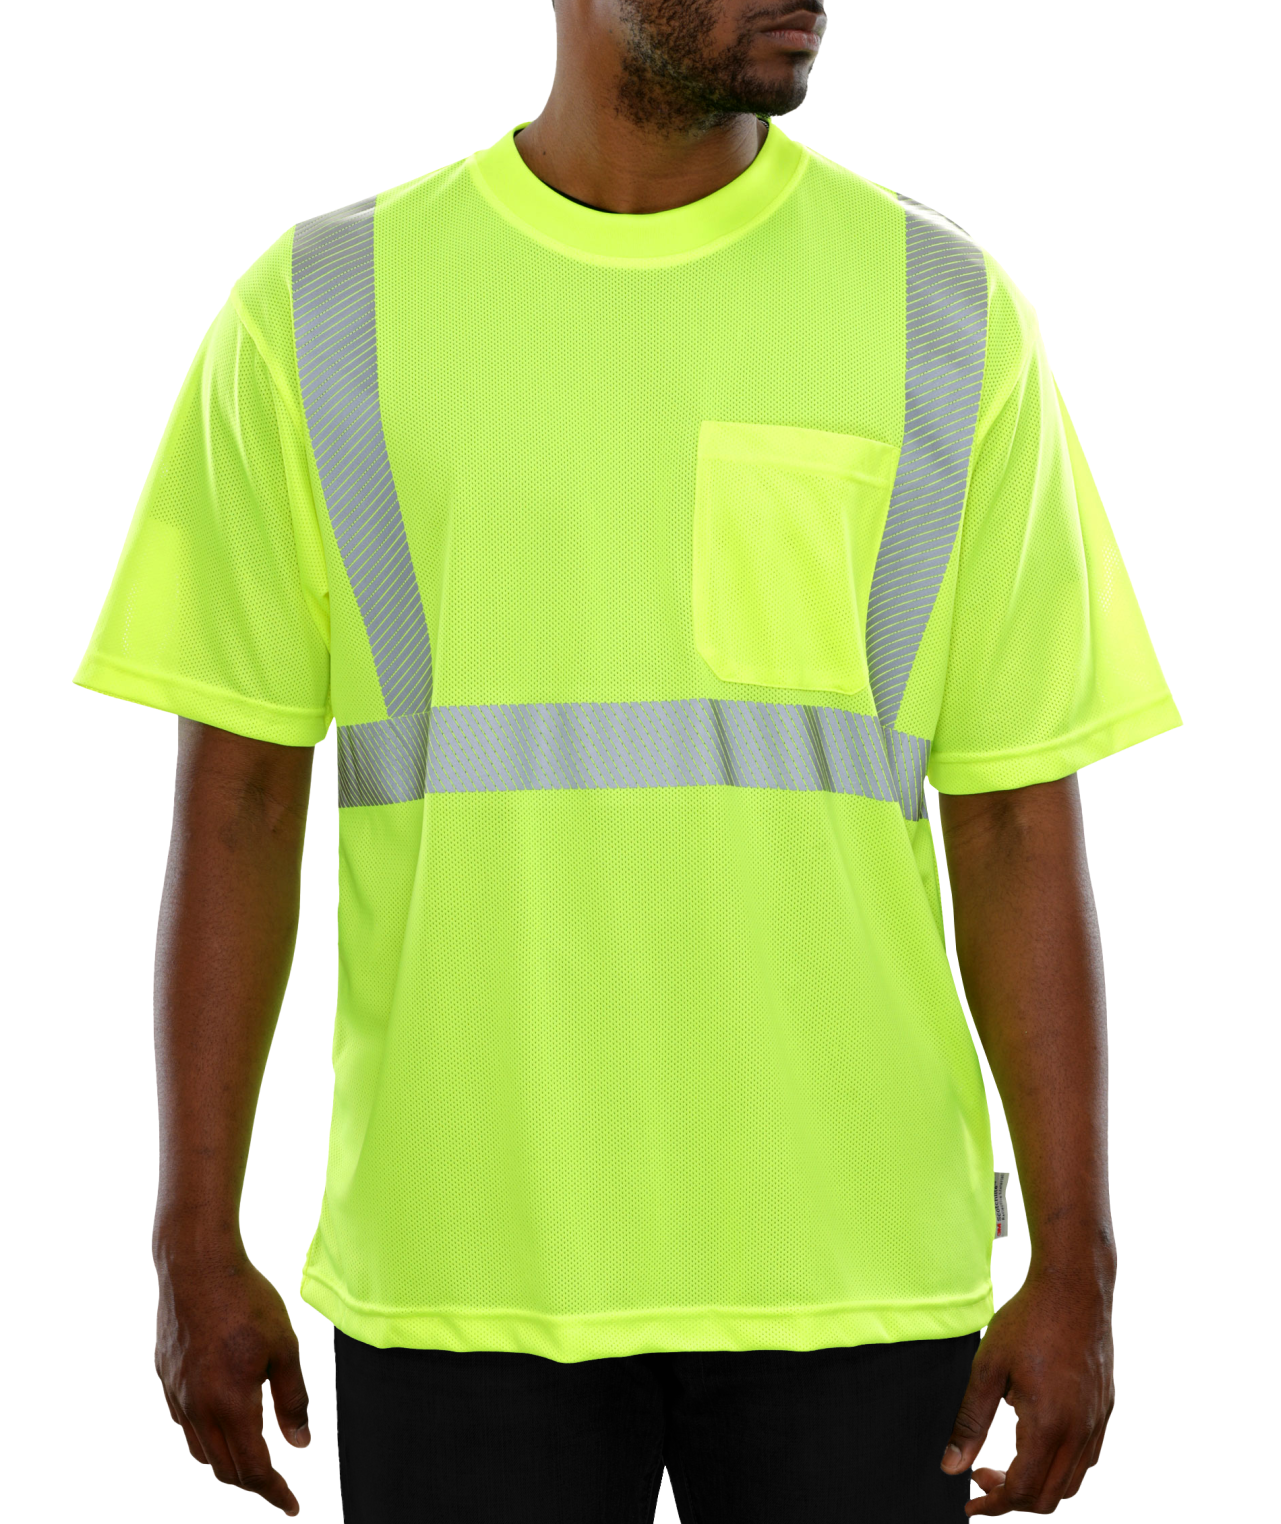 Lime Micromesh Reflective Shirt: 103CTLM 6X / PXR - Customized x Back